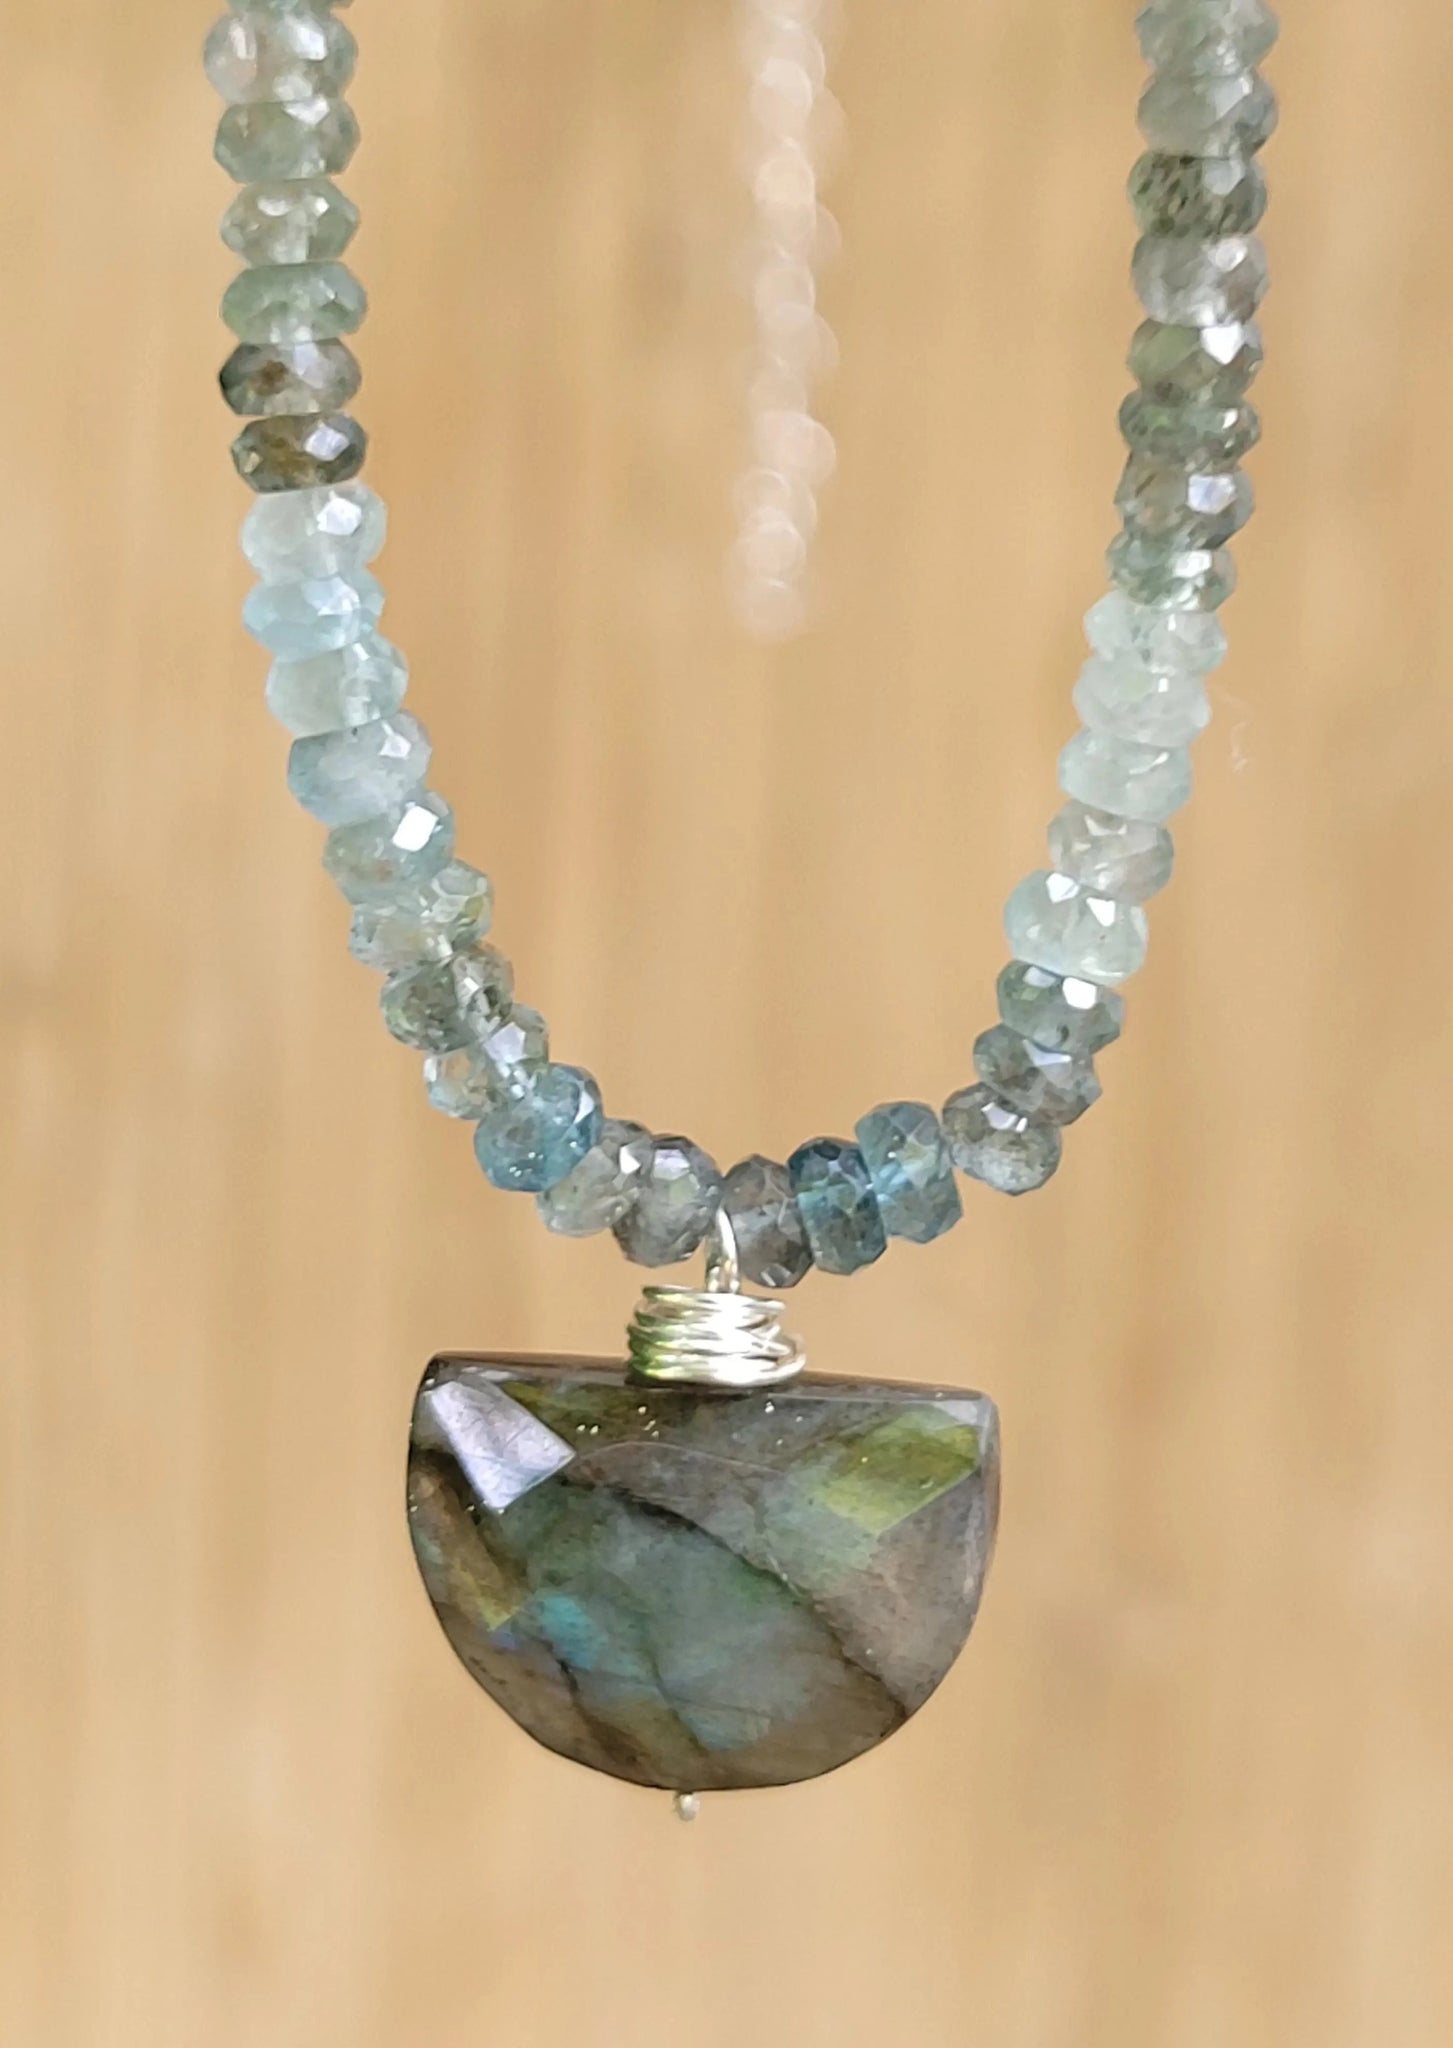 Labradorite & Aquamarine Necklace NBK1822